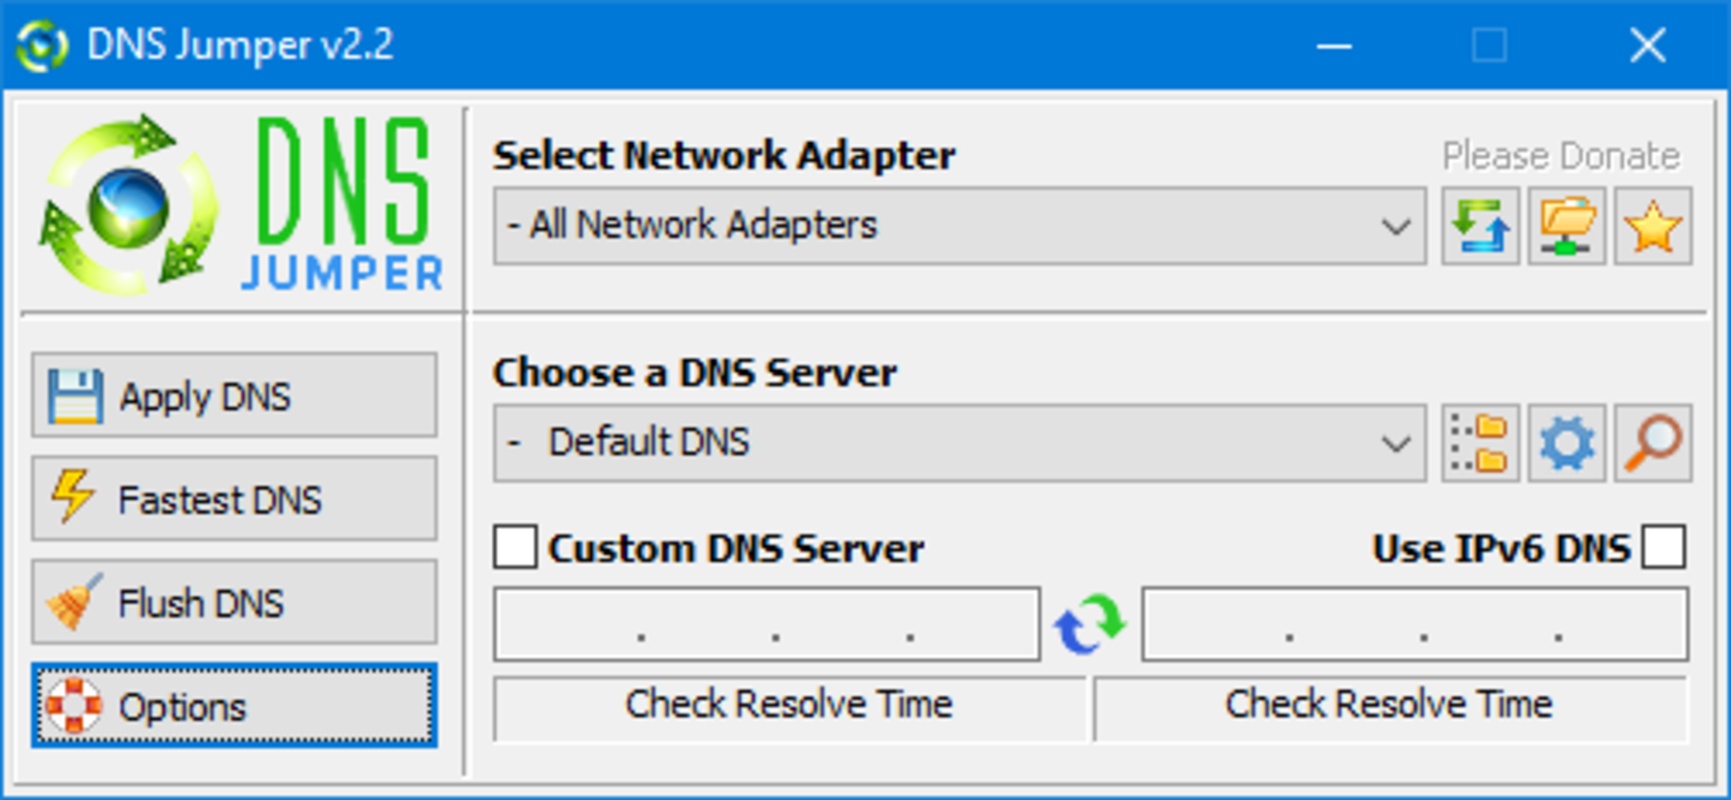 DNS Jumper 2.2 feature